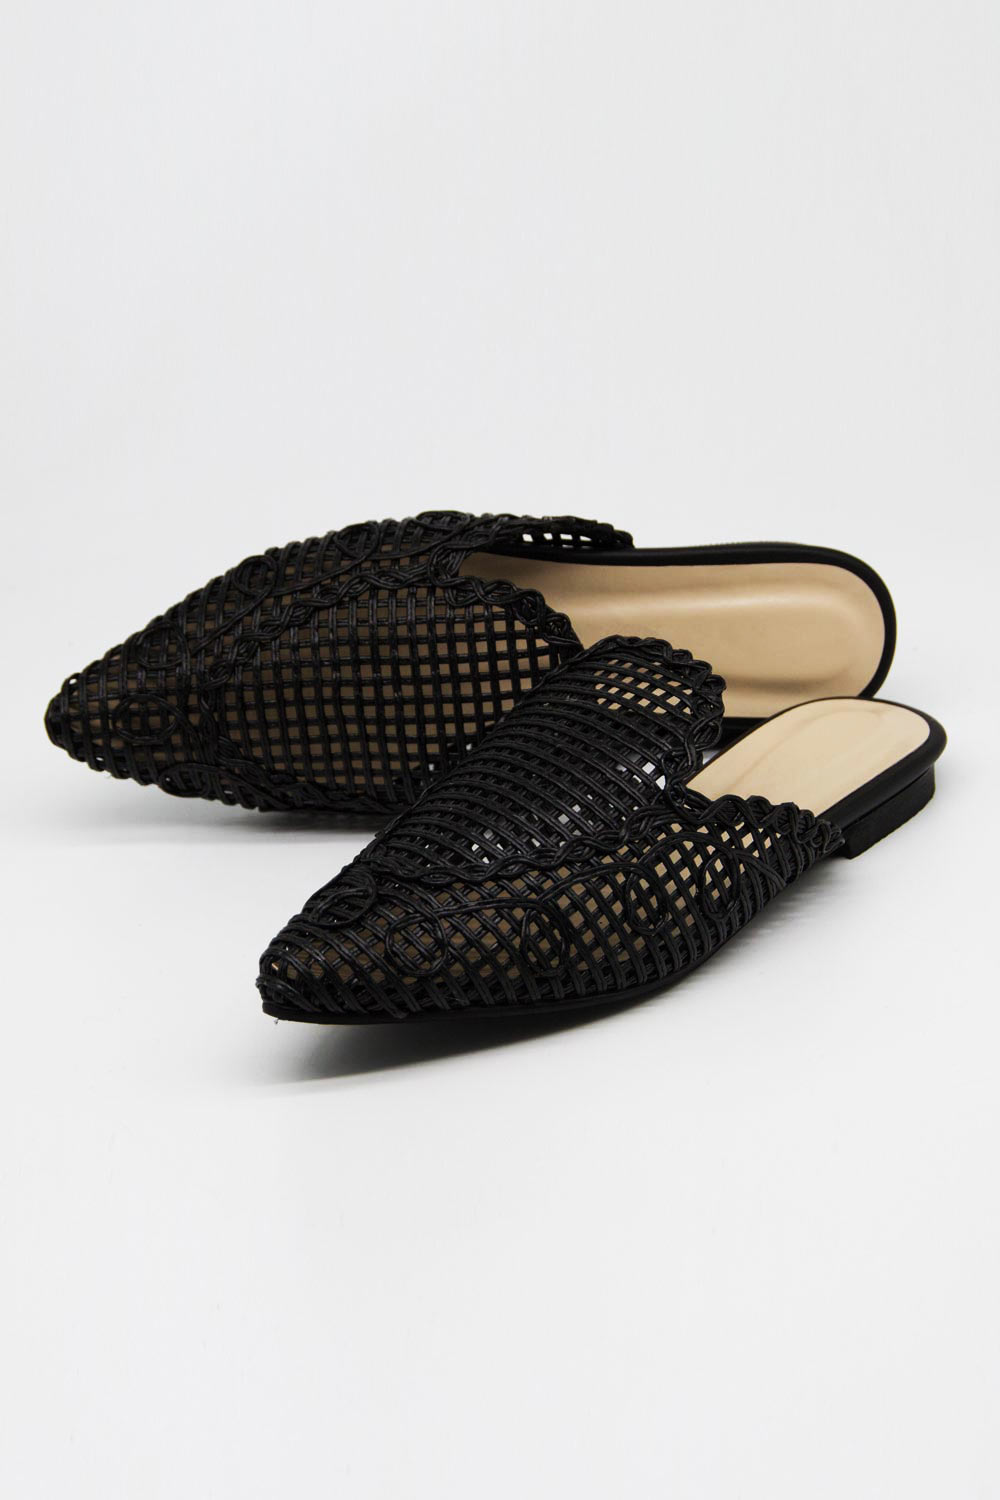 Knit Designed Mule Slippers (Black)